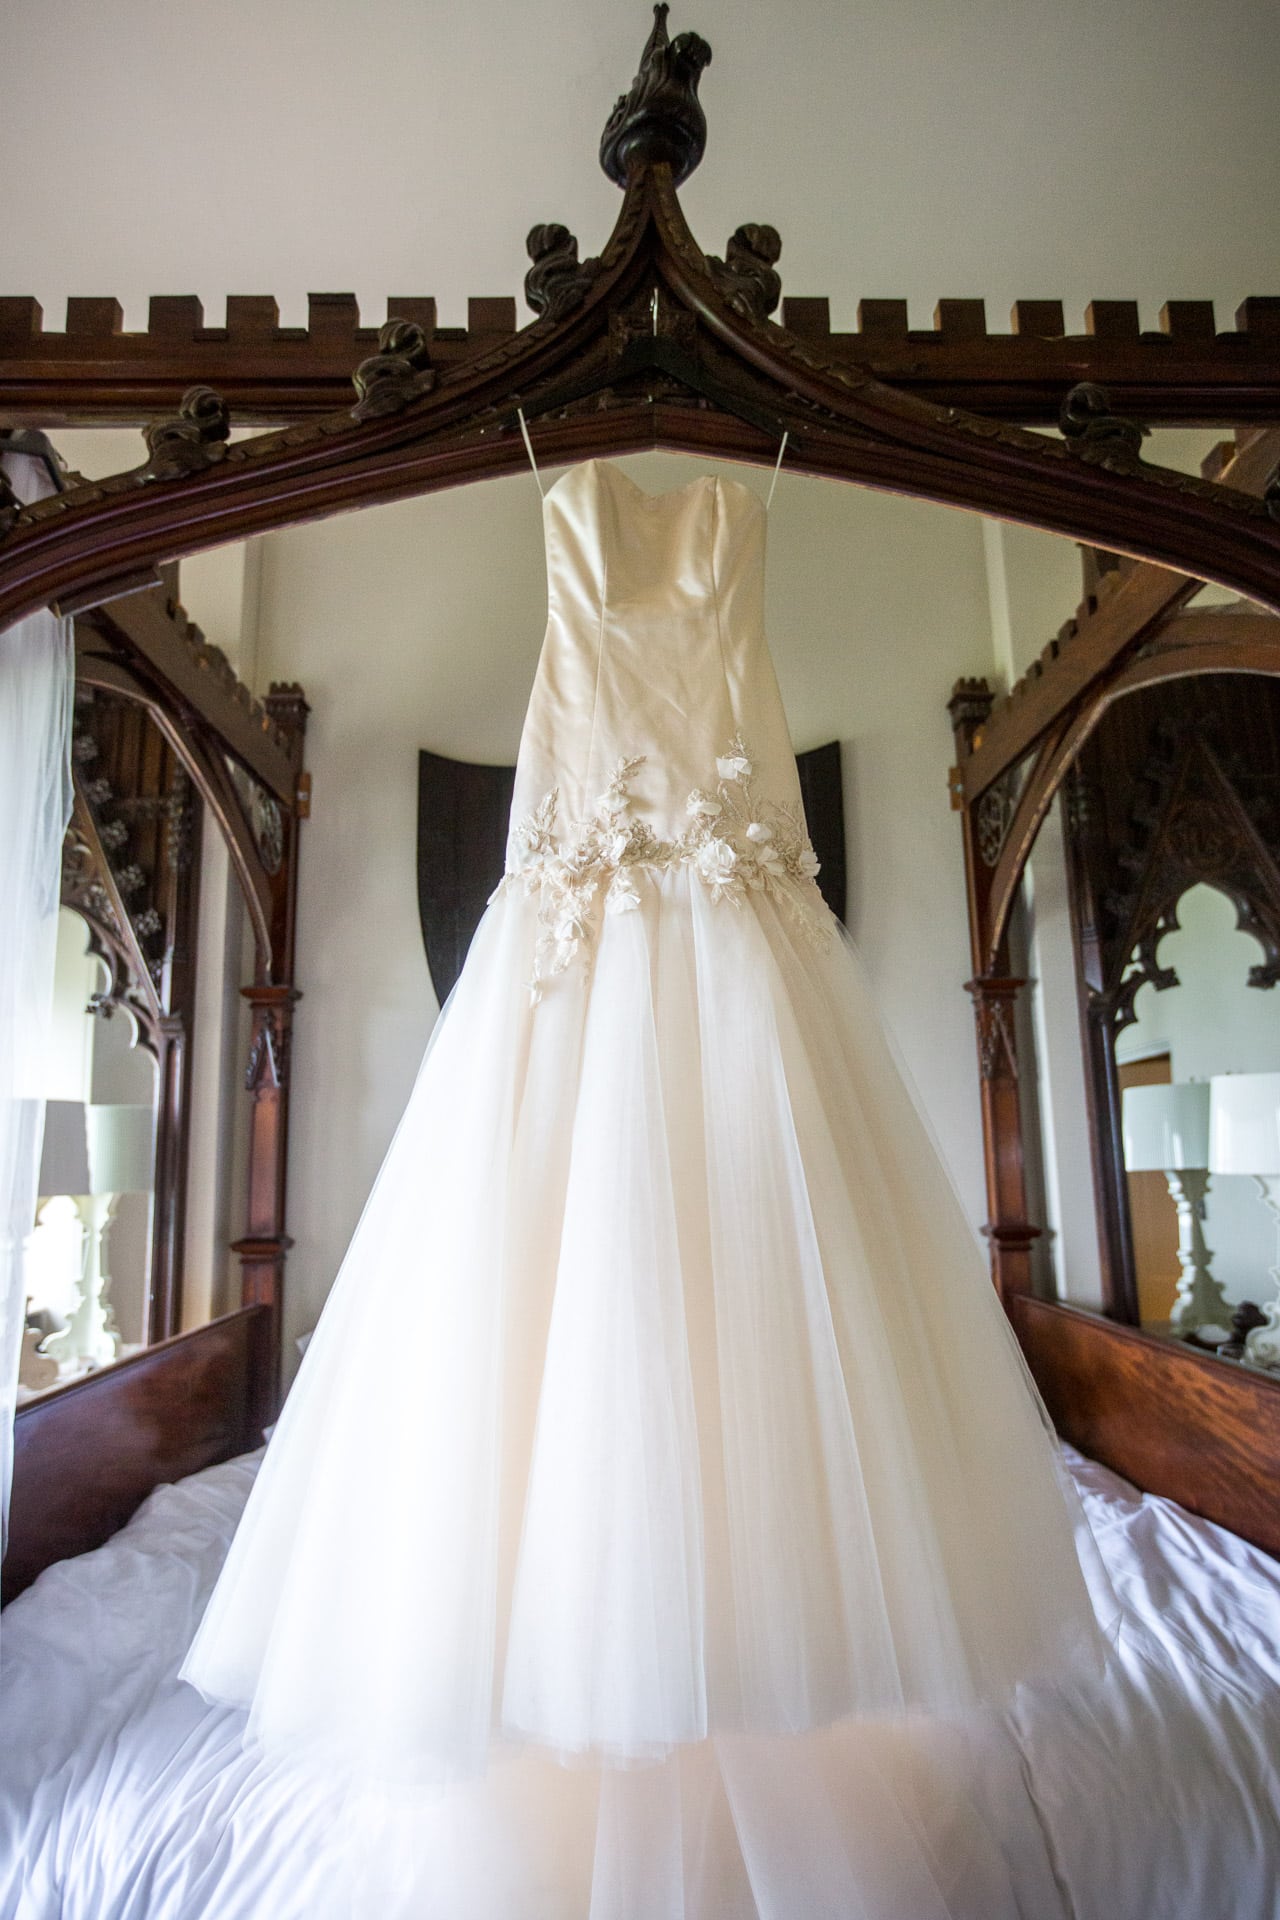 stunning wedding dress hanging in Aynhoe Park bridal suite